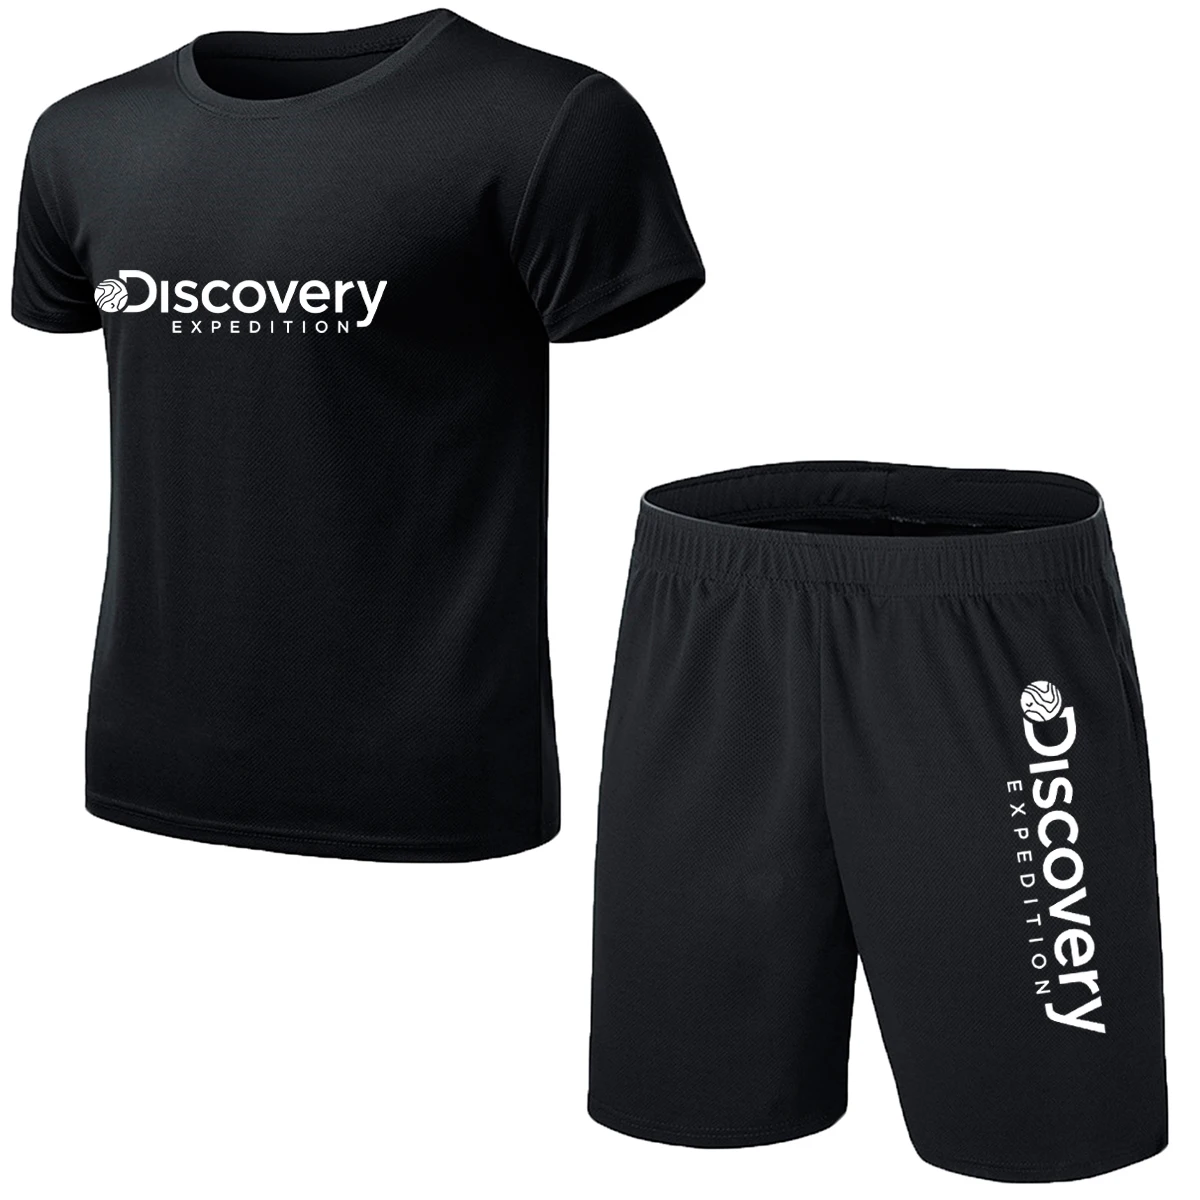 DISCOVERY- New men's suit fashion 2-piece men's street short shirt shorts casual loose clothes jogging training suit